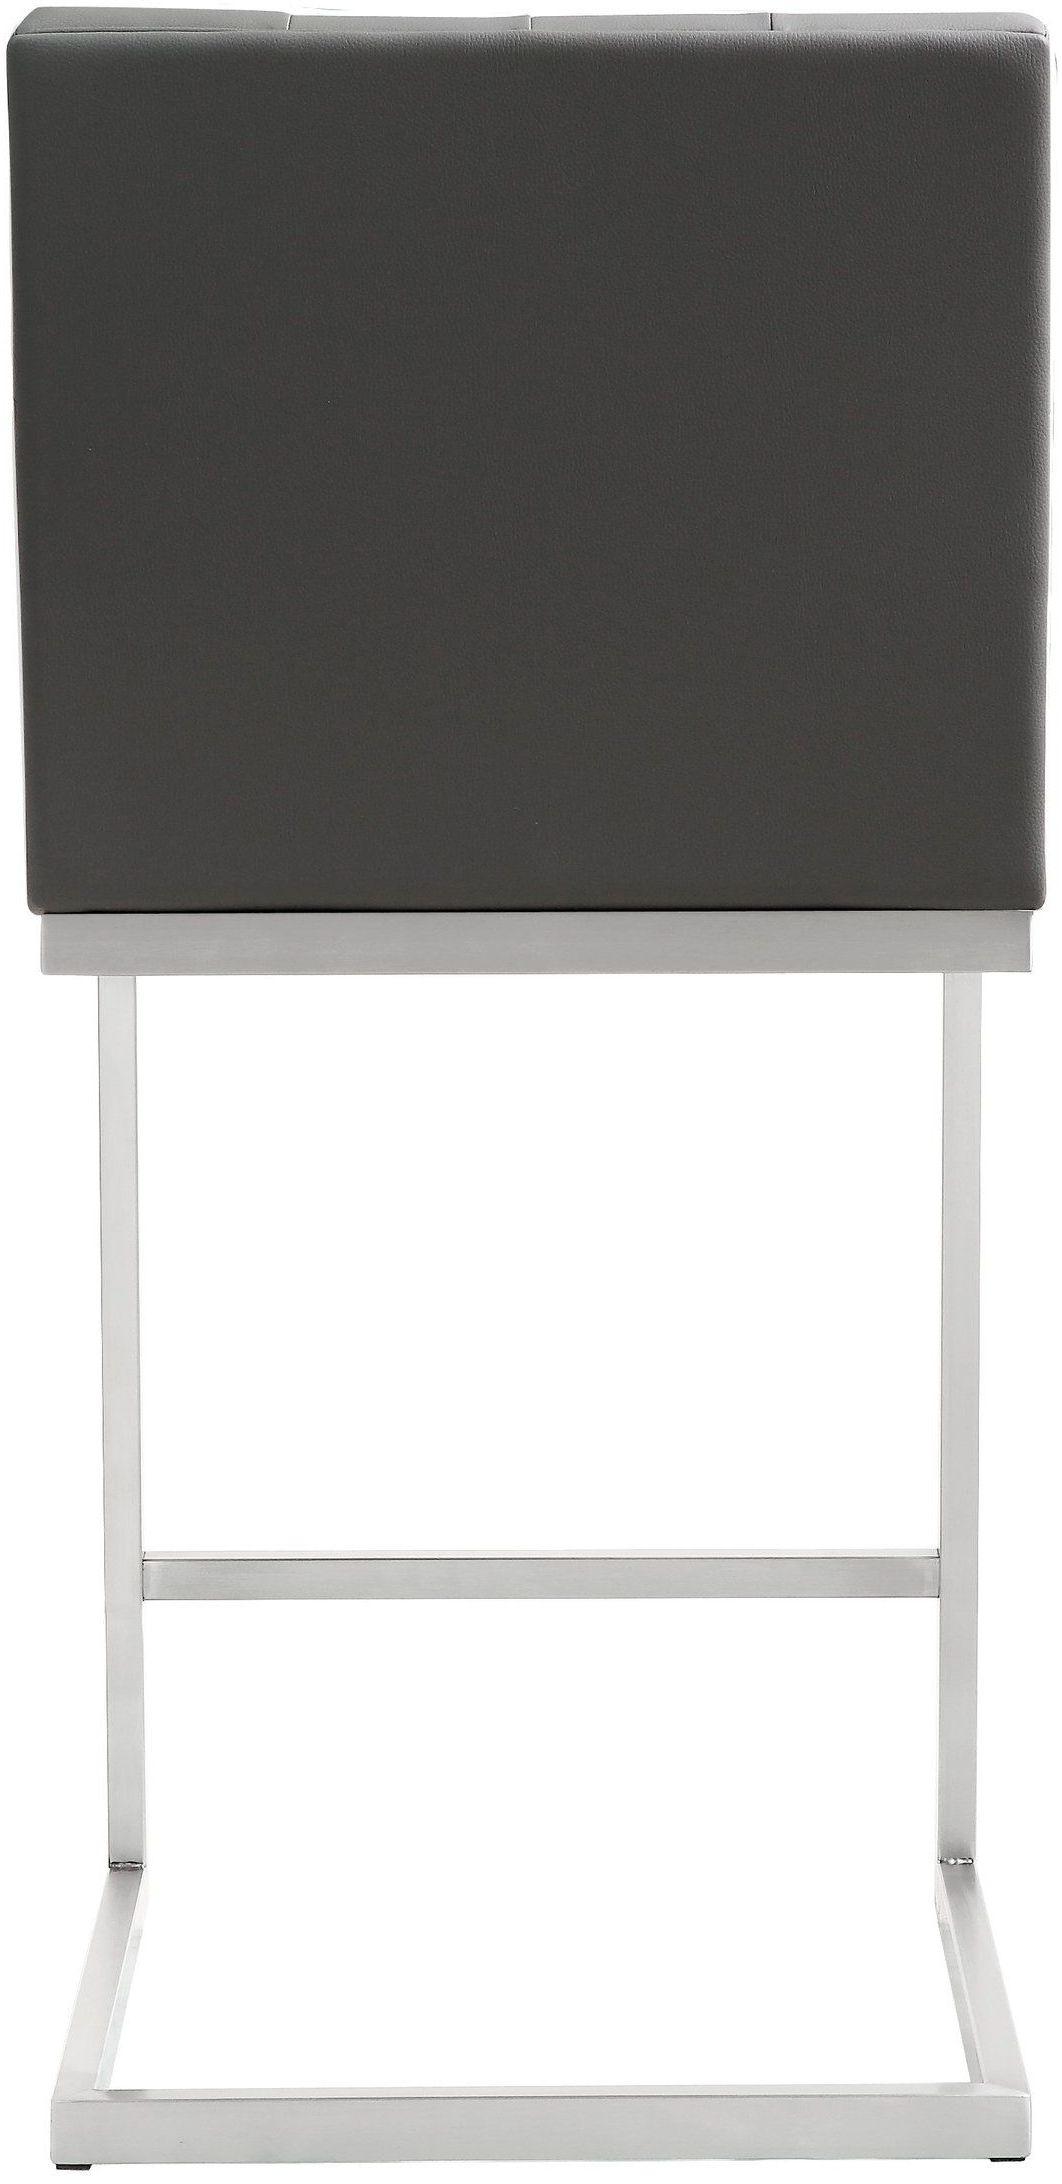 Tov Furniture Helsinki Grey Stainless Steel Counter Stool Set of 2